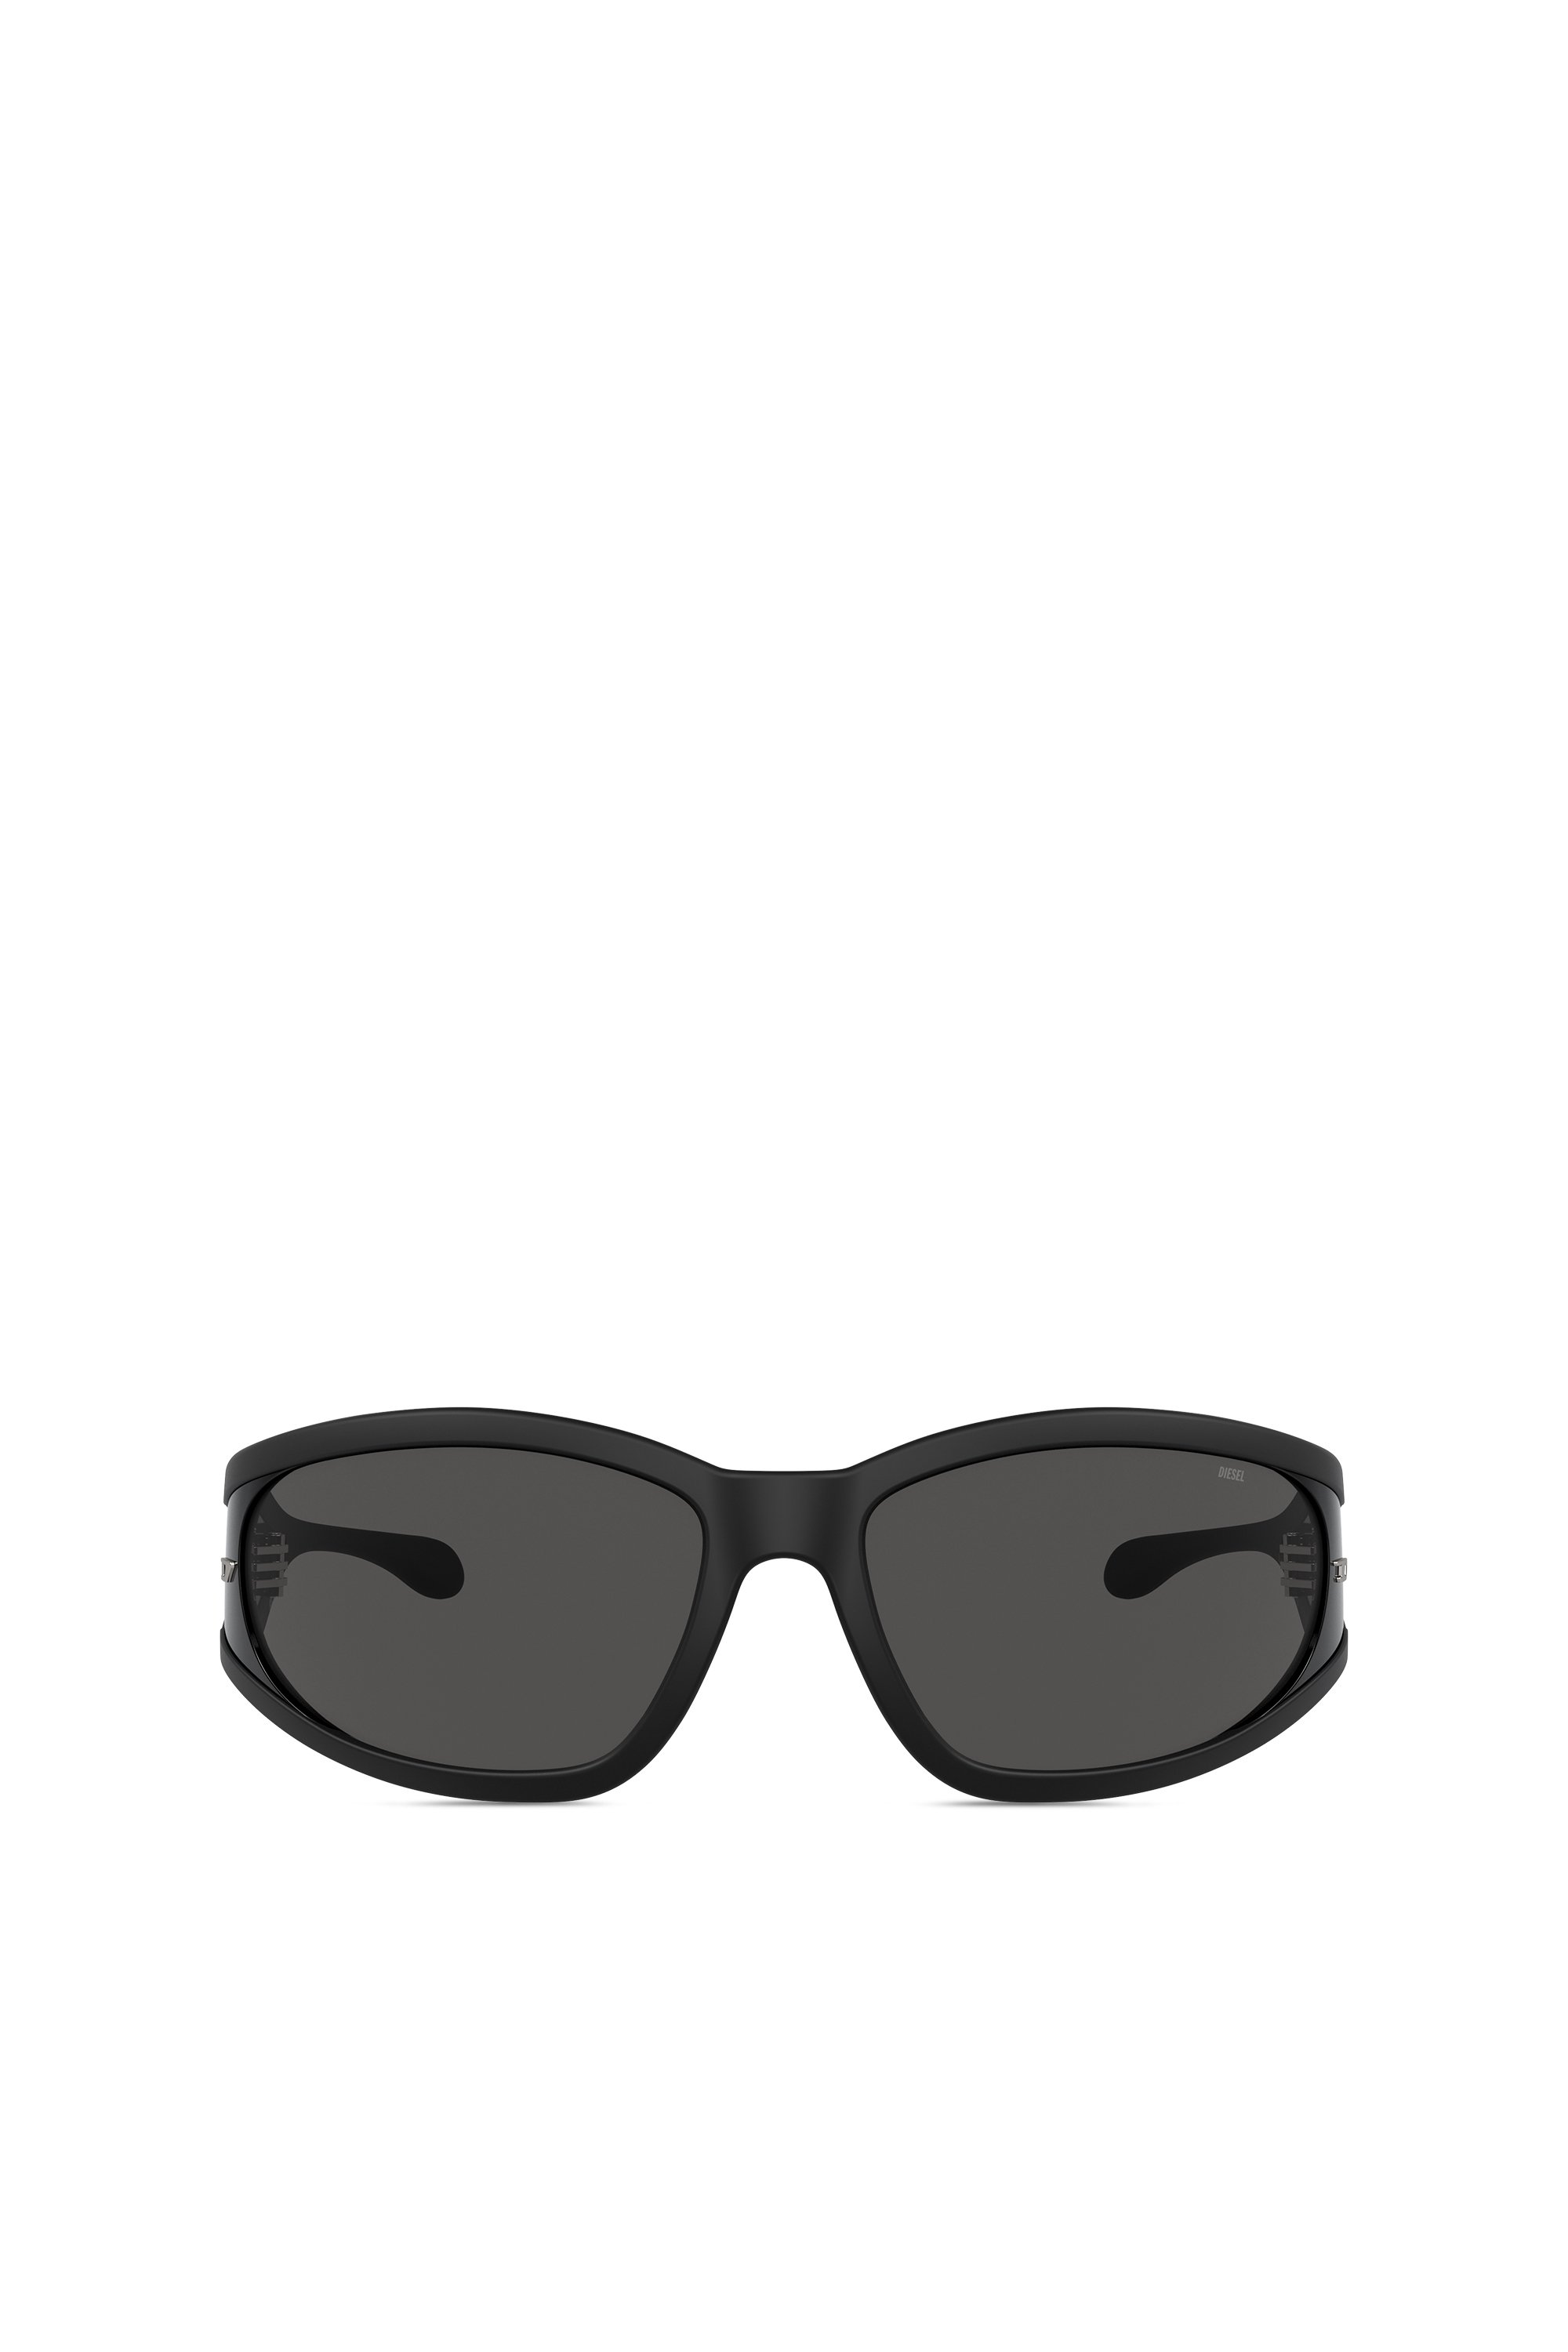 Diesel - Gafas de sol rectangulares en acetato - Gafas de sol - Unisex - Negro